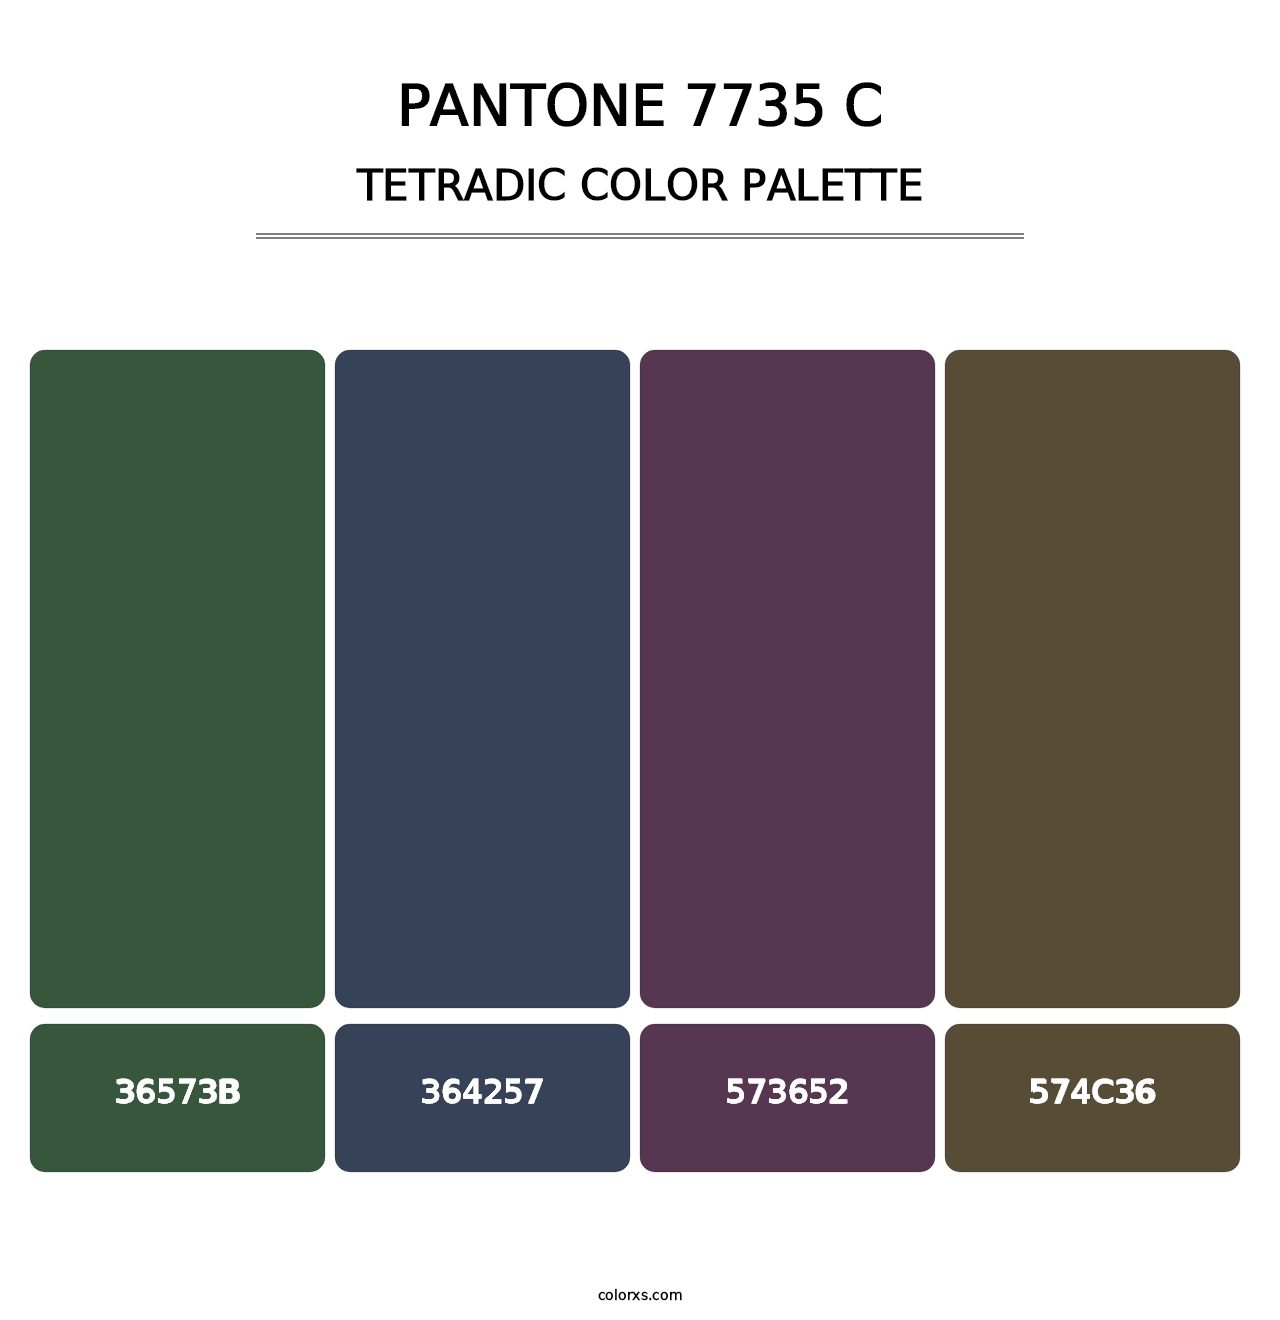 PANTONE 7735 C - Tetradic Color Palette